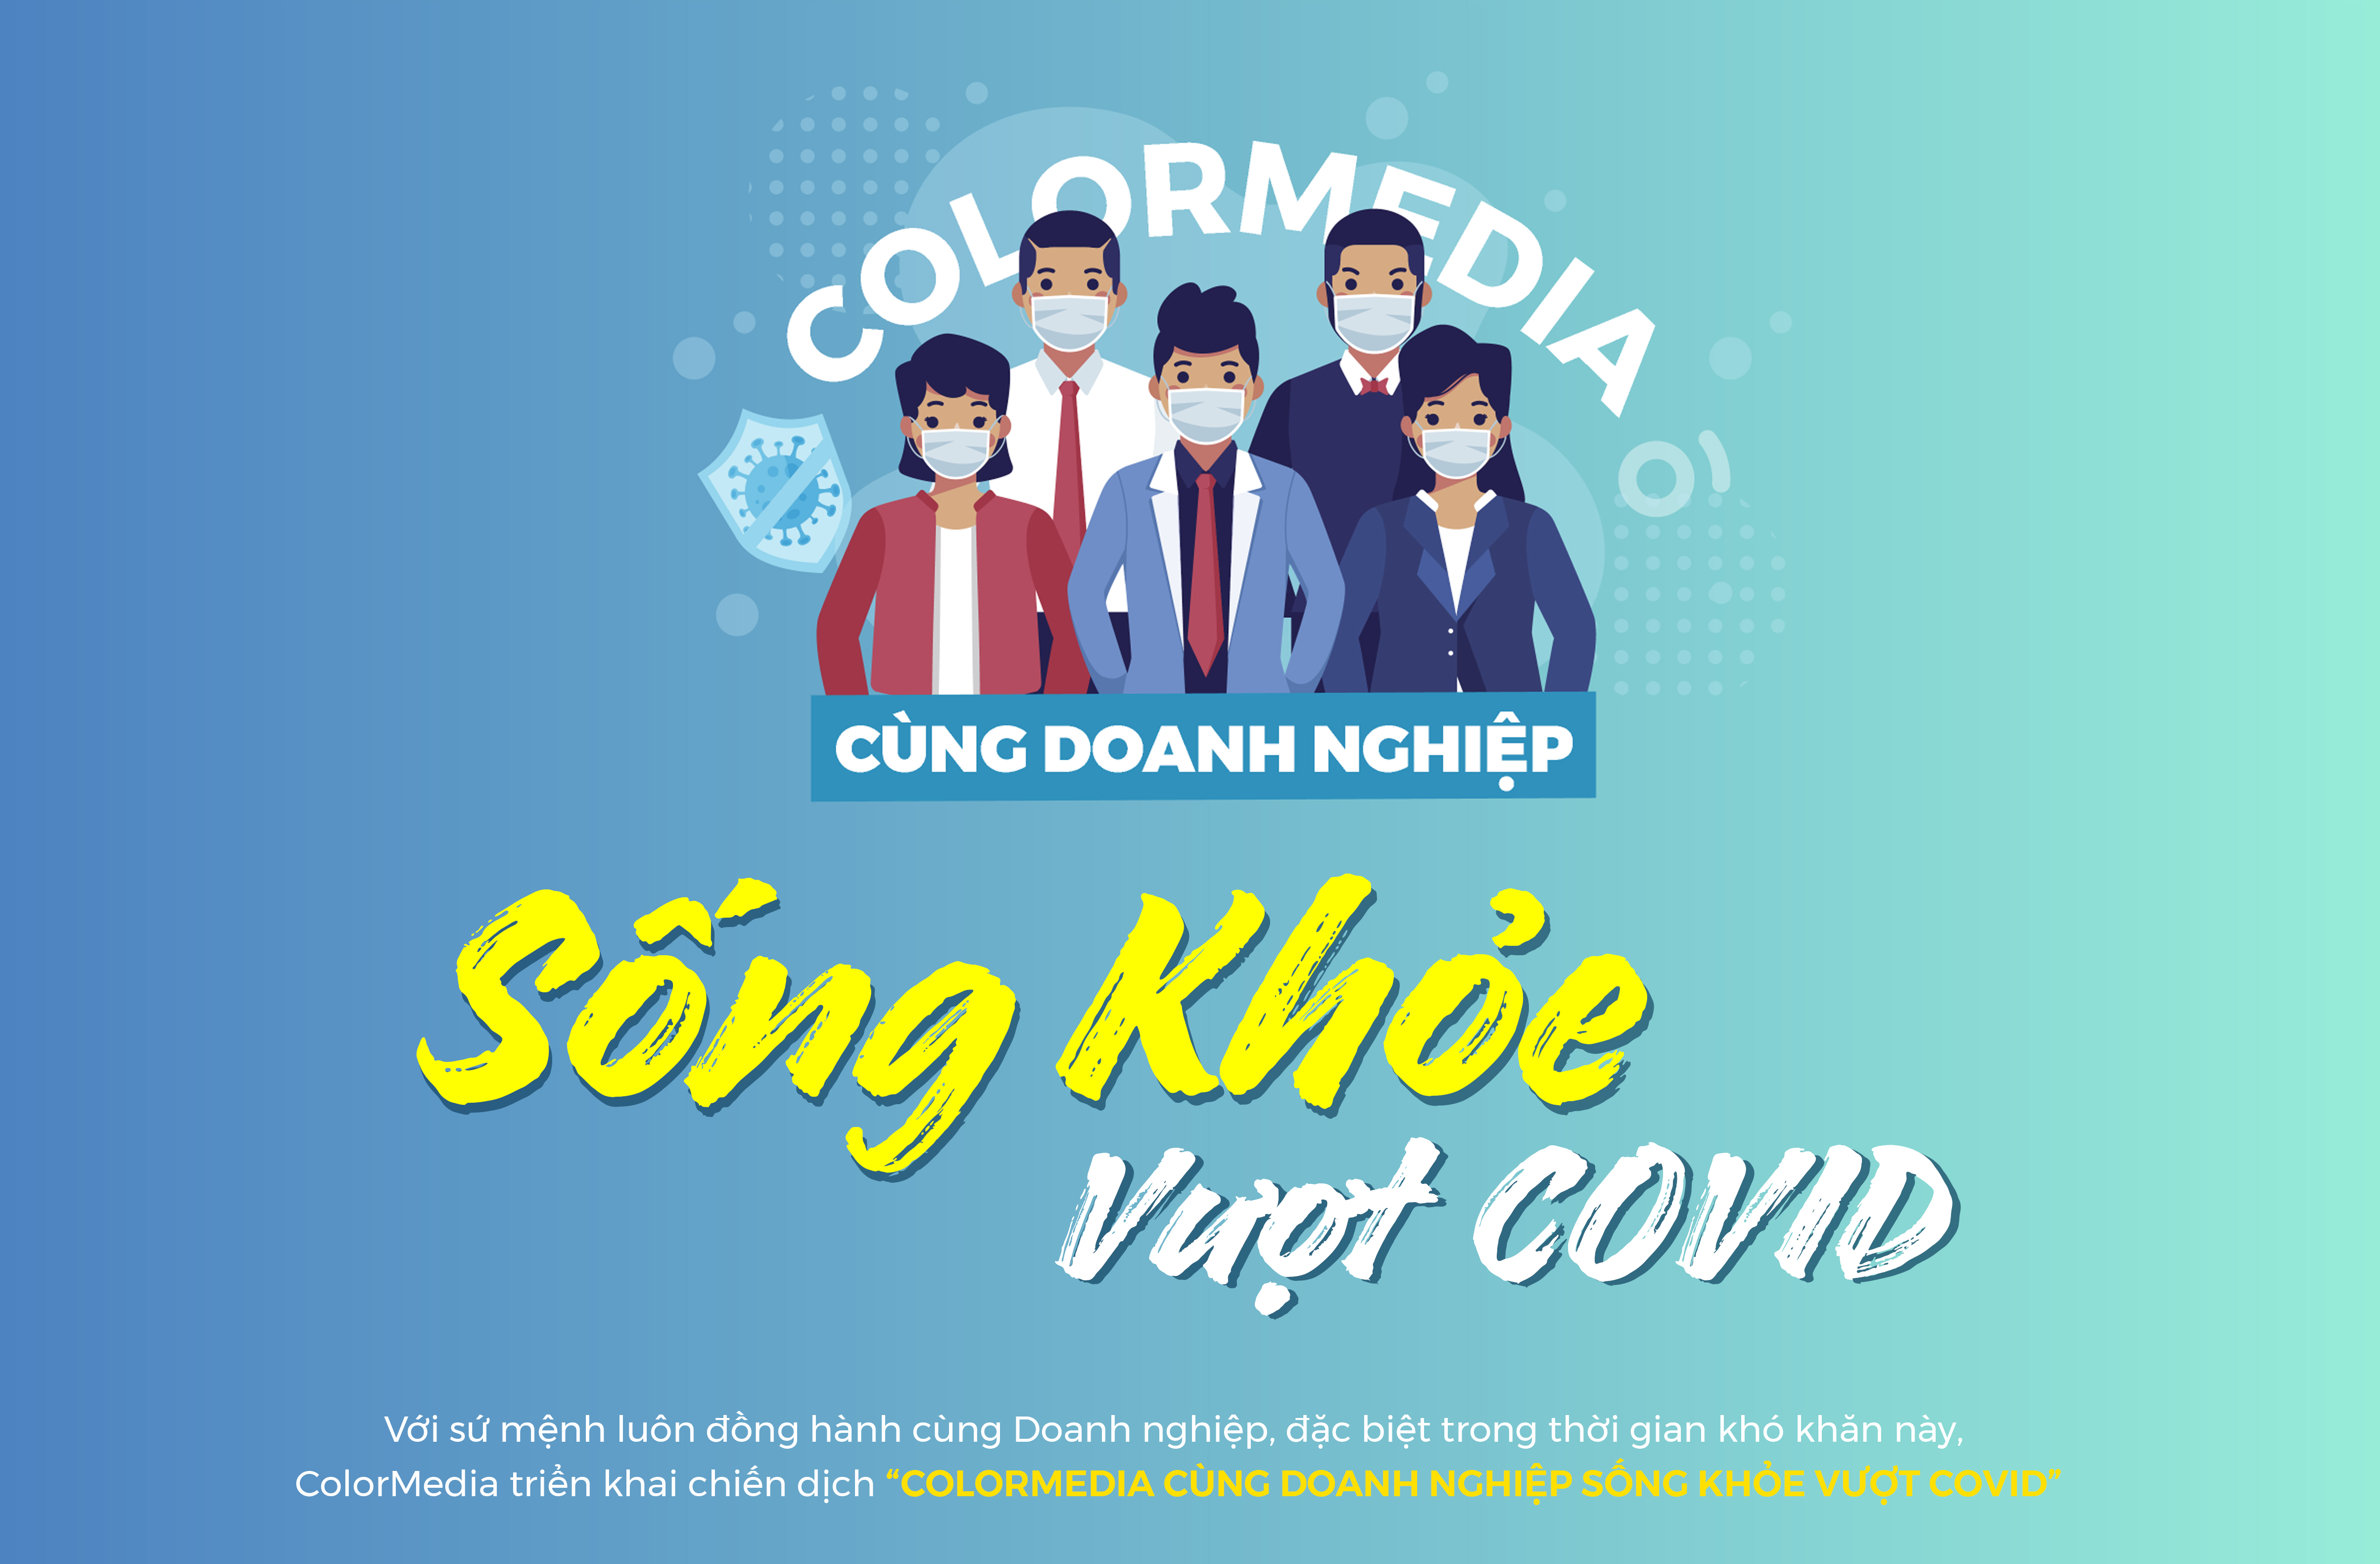 ColorMedia-dong-hanh-cung-doanh-nghiep-song-khoe-vuot-covid